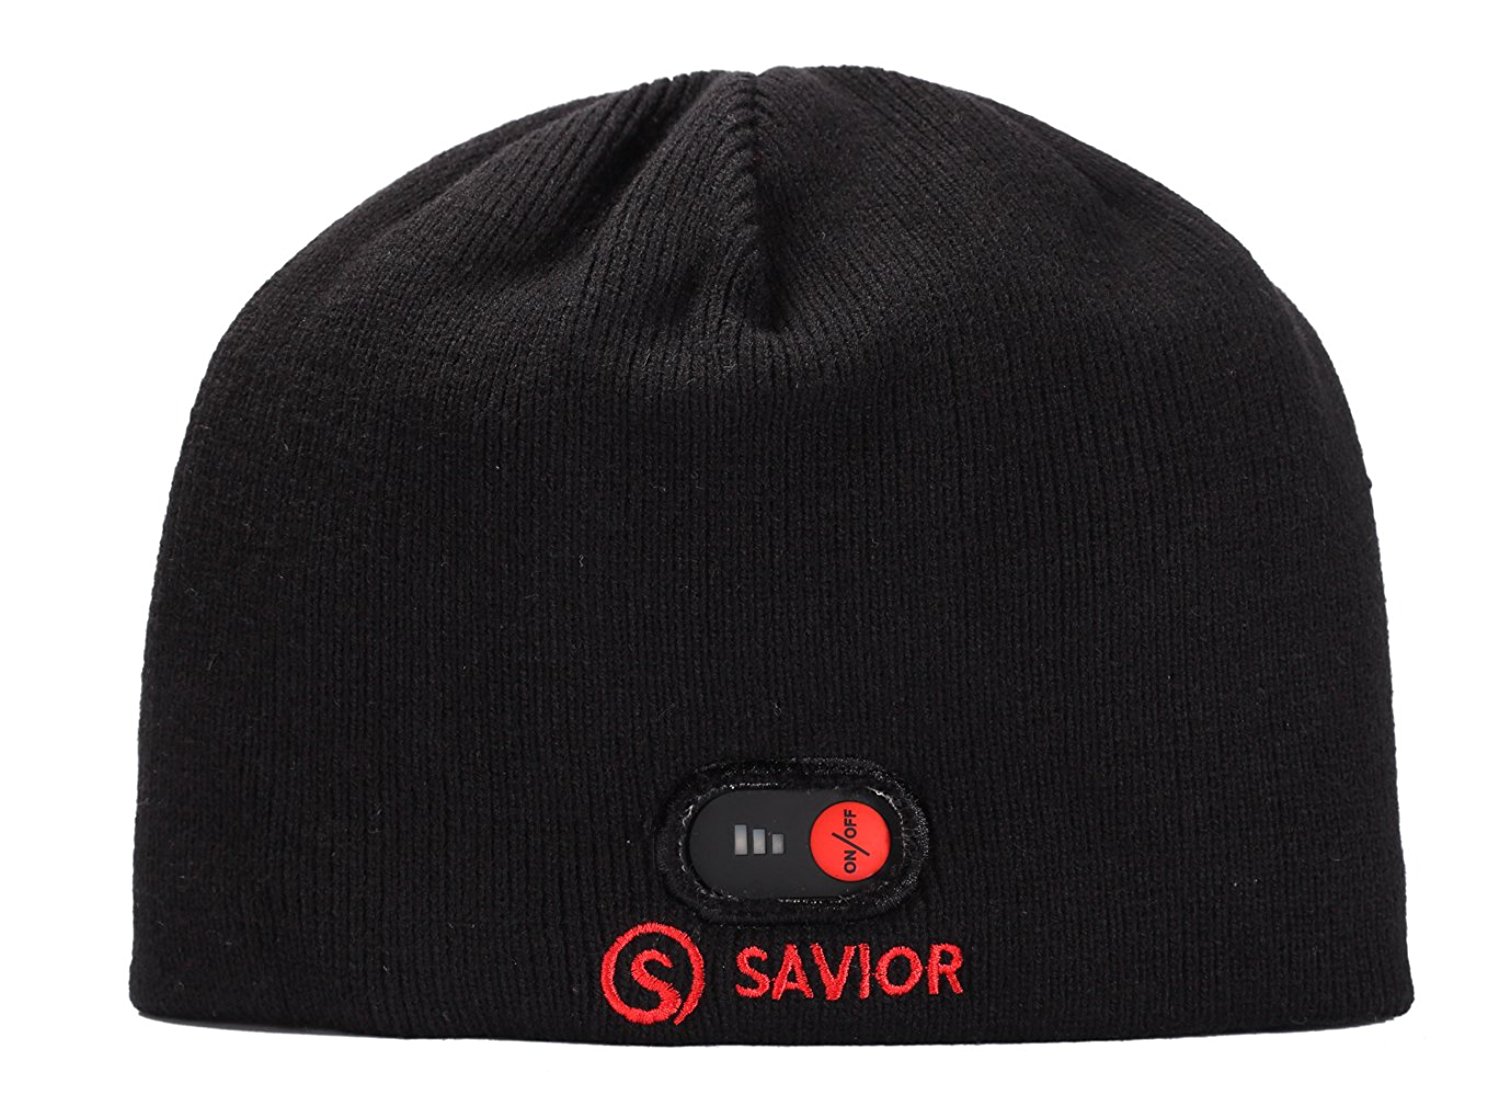 Savior Ritzy Electric Heated Hat - 01